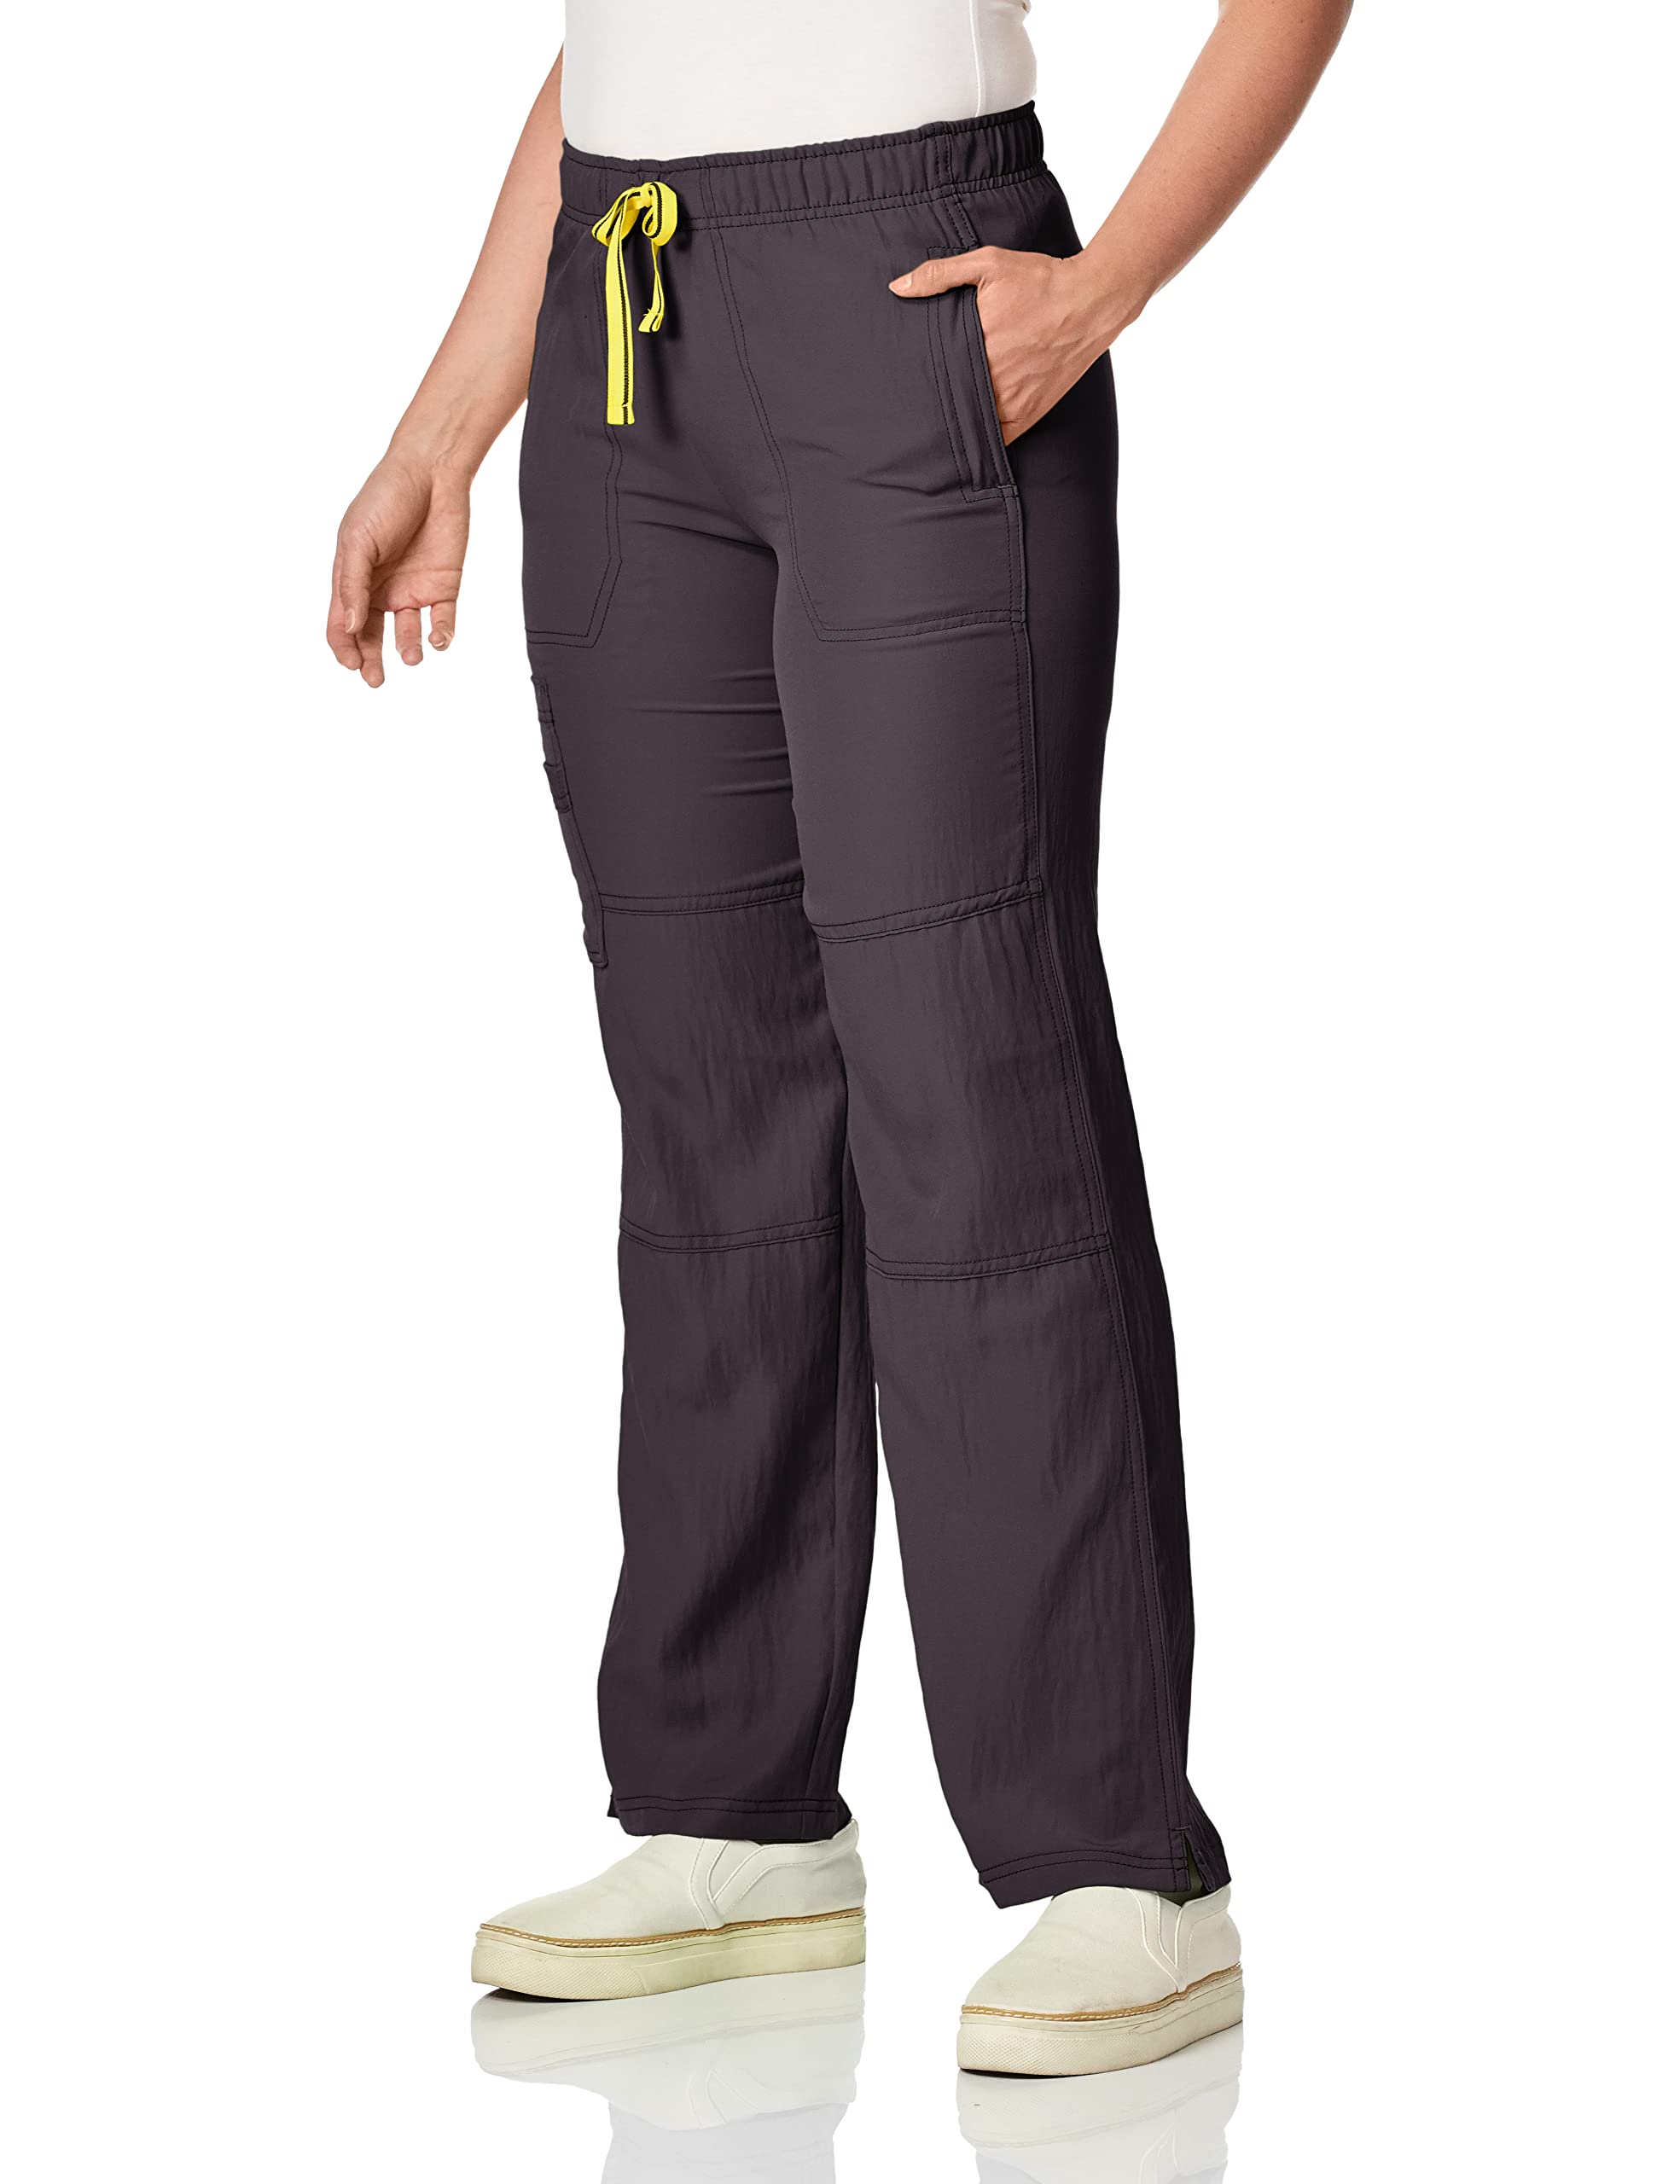 Wonderwink Womens Four Stretch Womens Cargo Medical Scrubs Pants, Grey, Xx-Large Petite Us